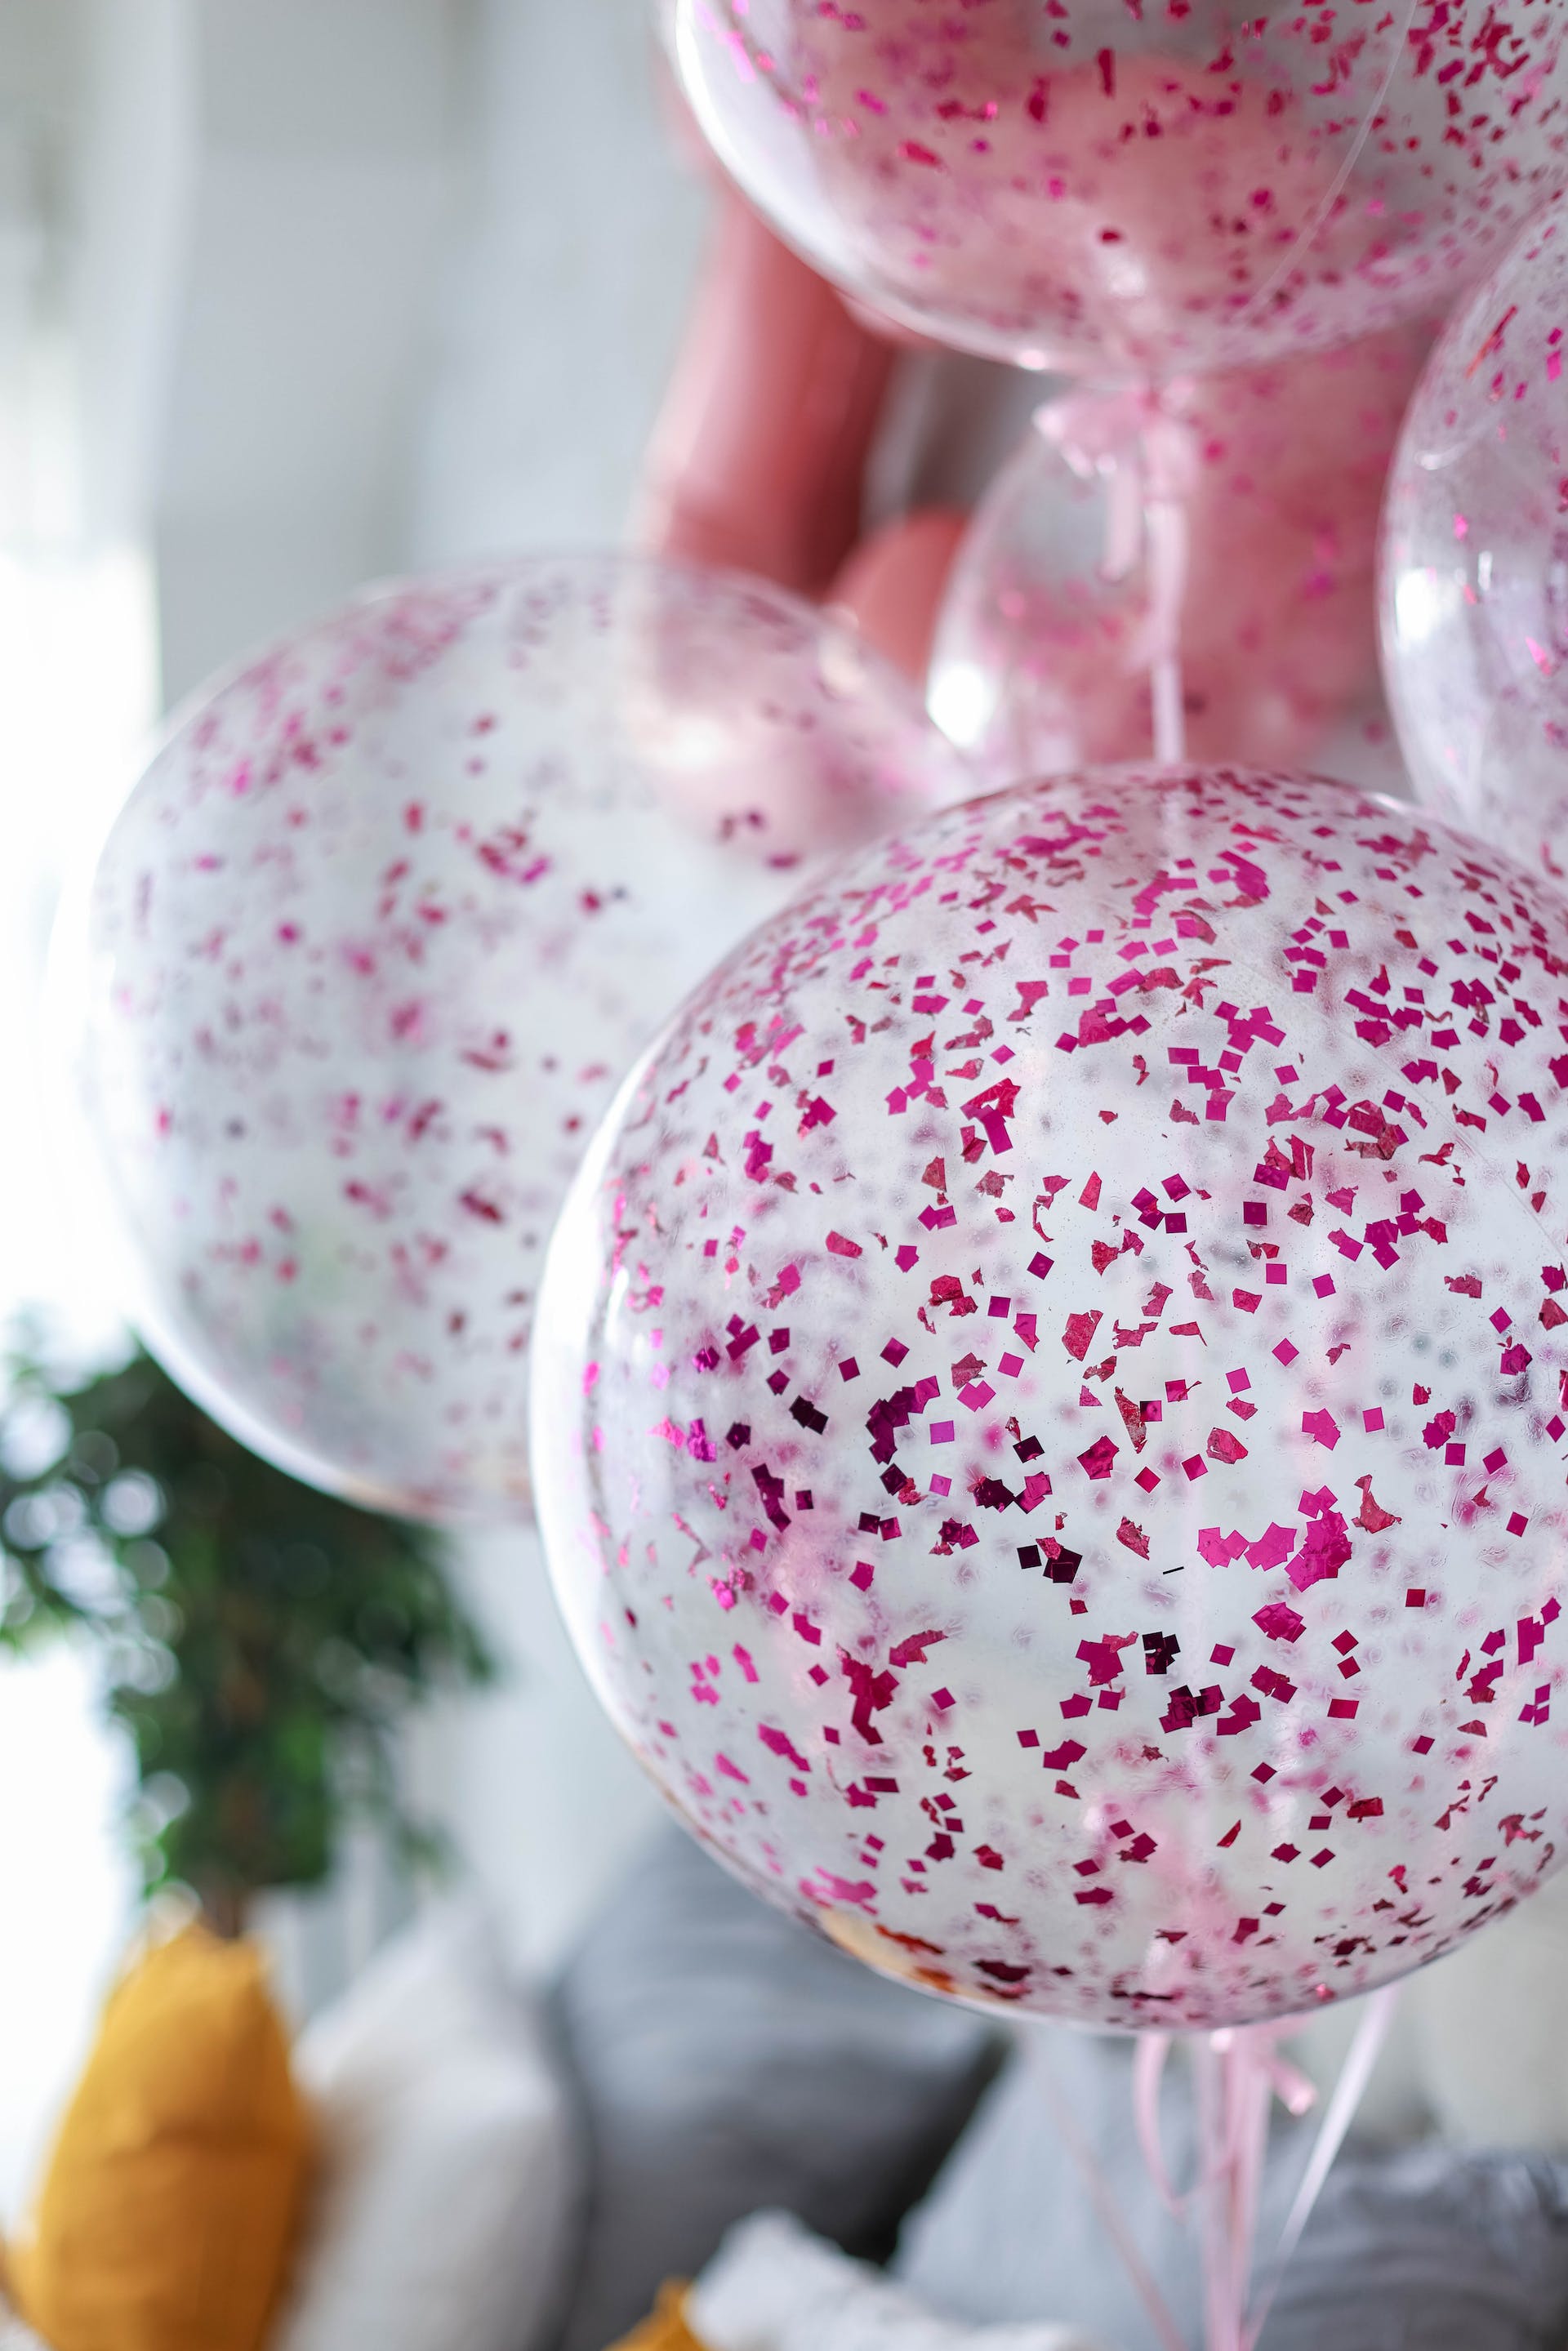 Luftballons mit rosa Konfetti. | Quelle: Pexels